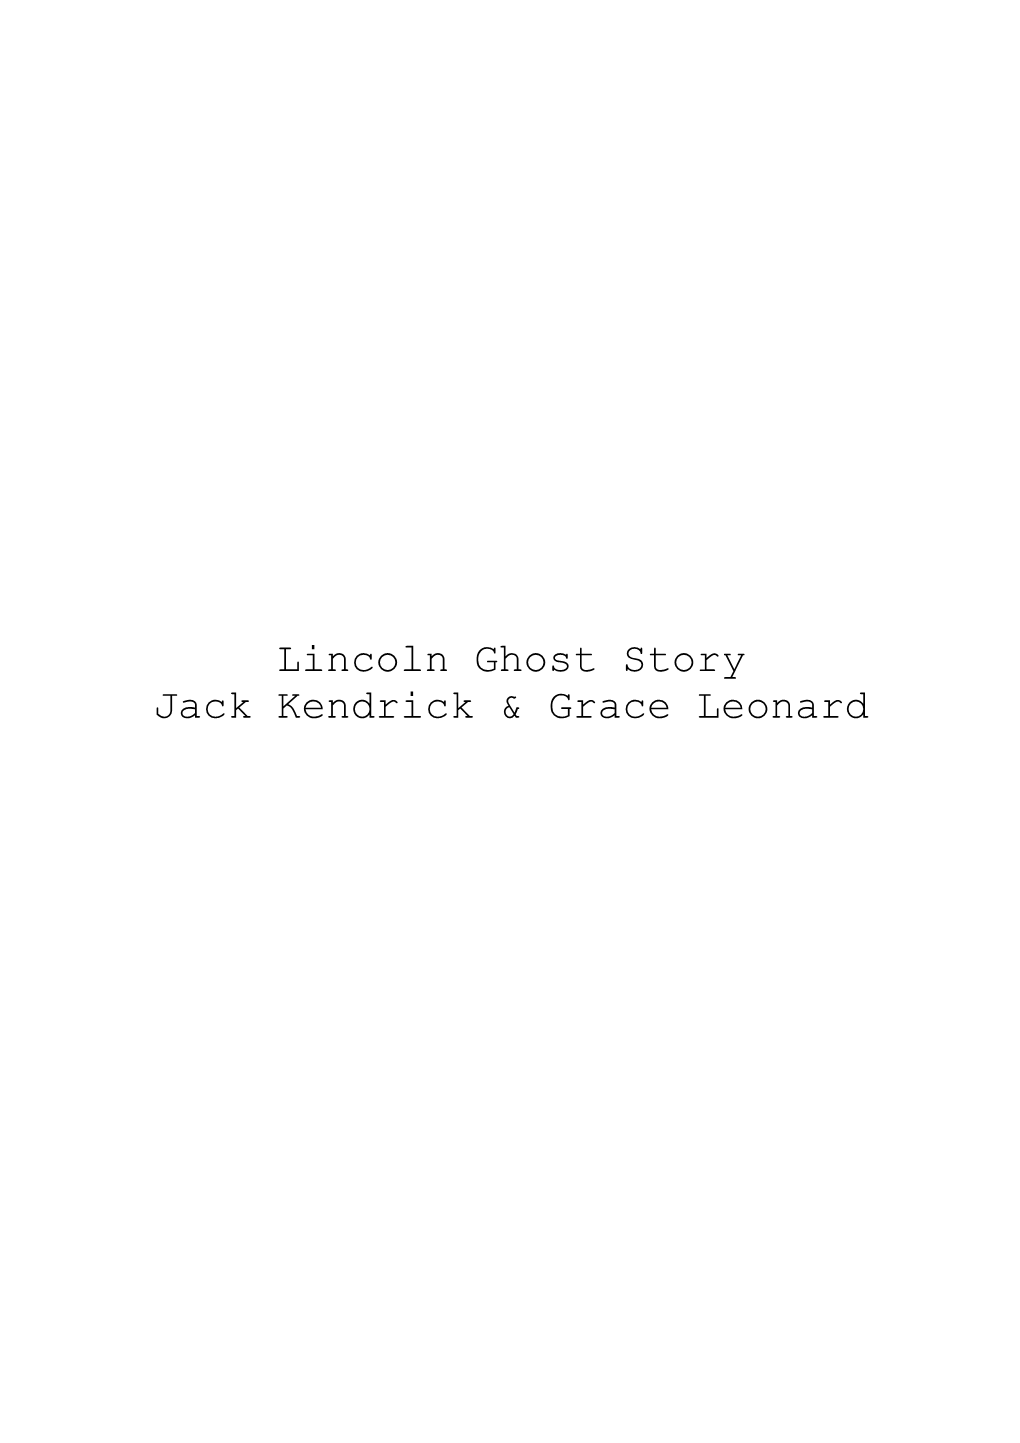 Jack Kendrick & Grace Leonard